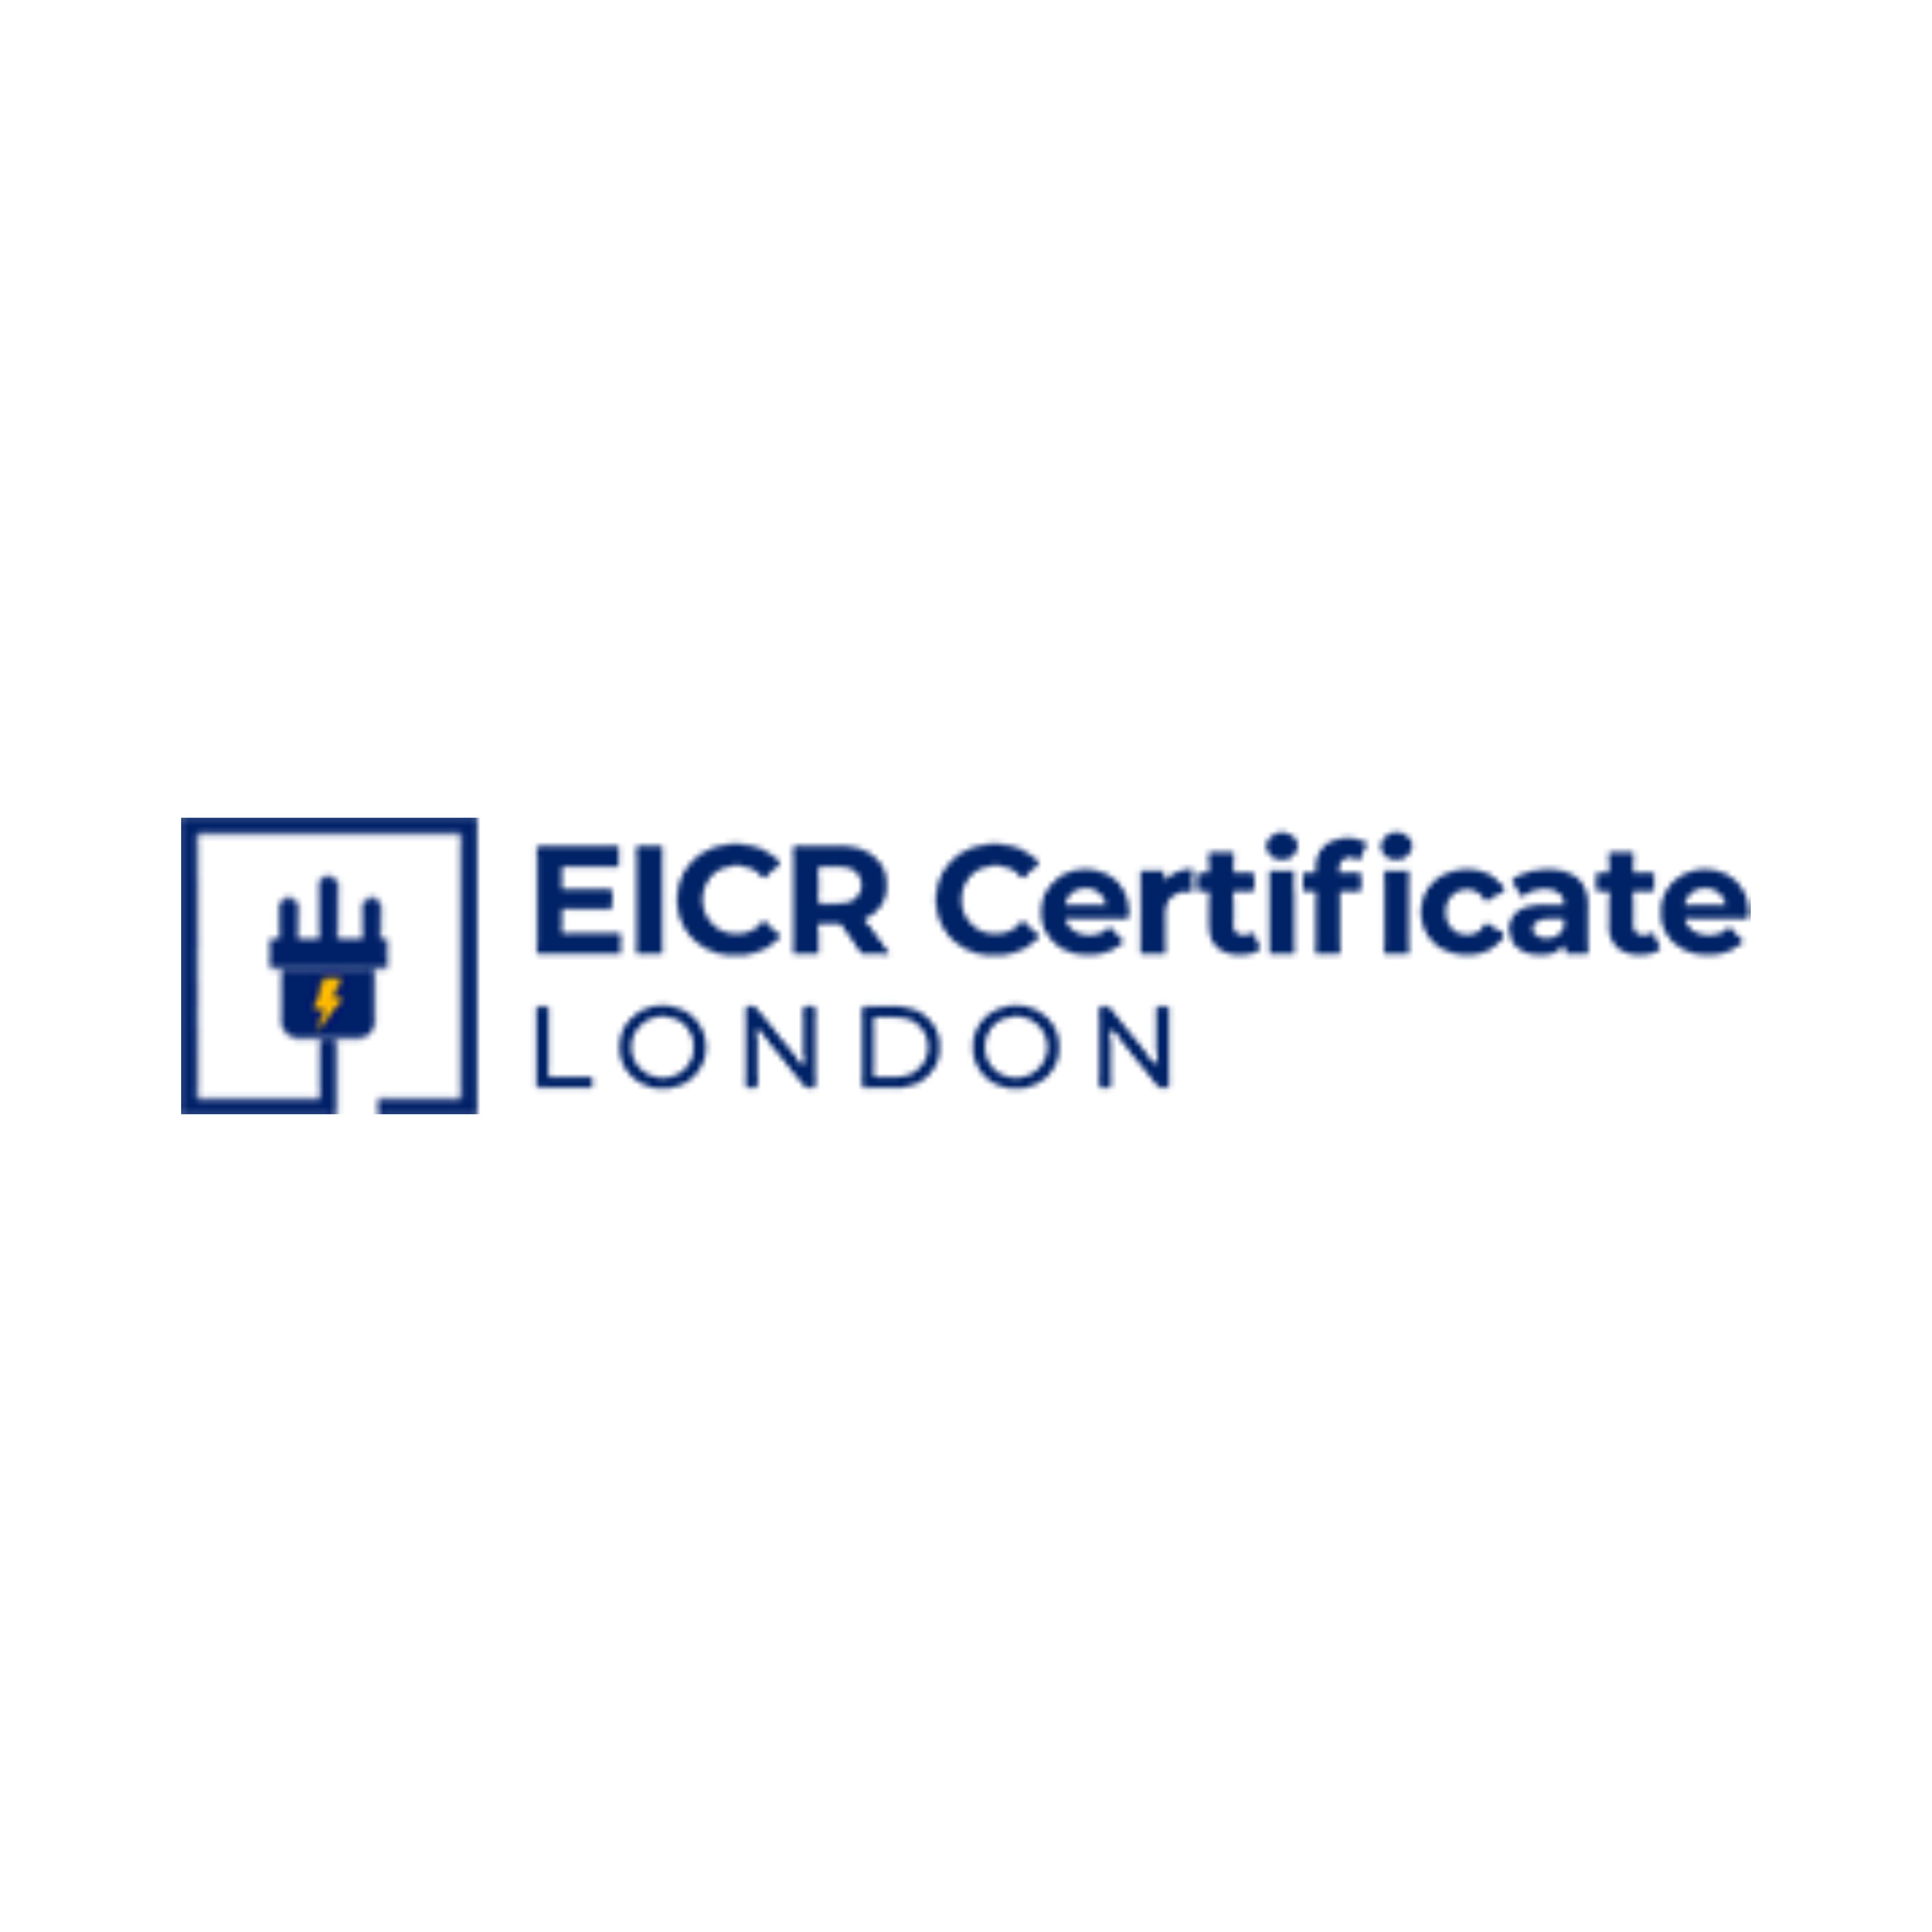 EICR Certificate London